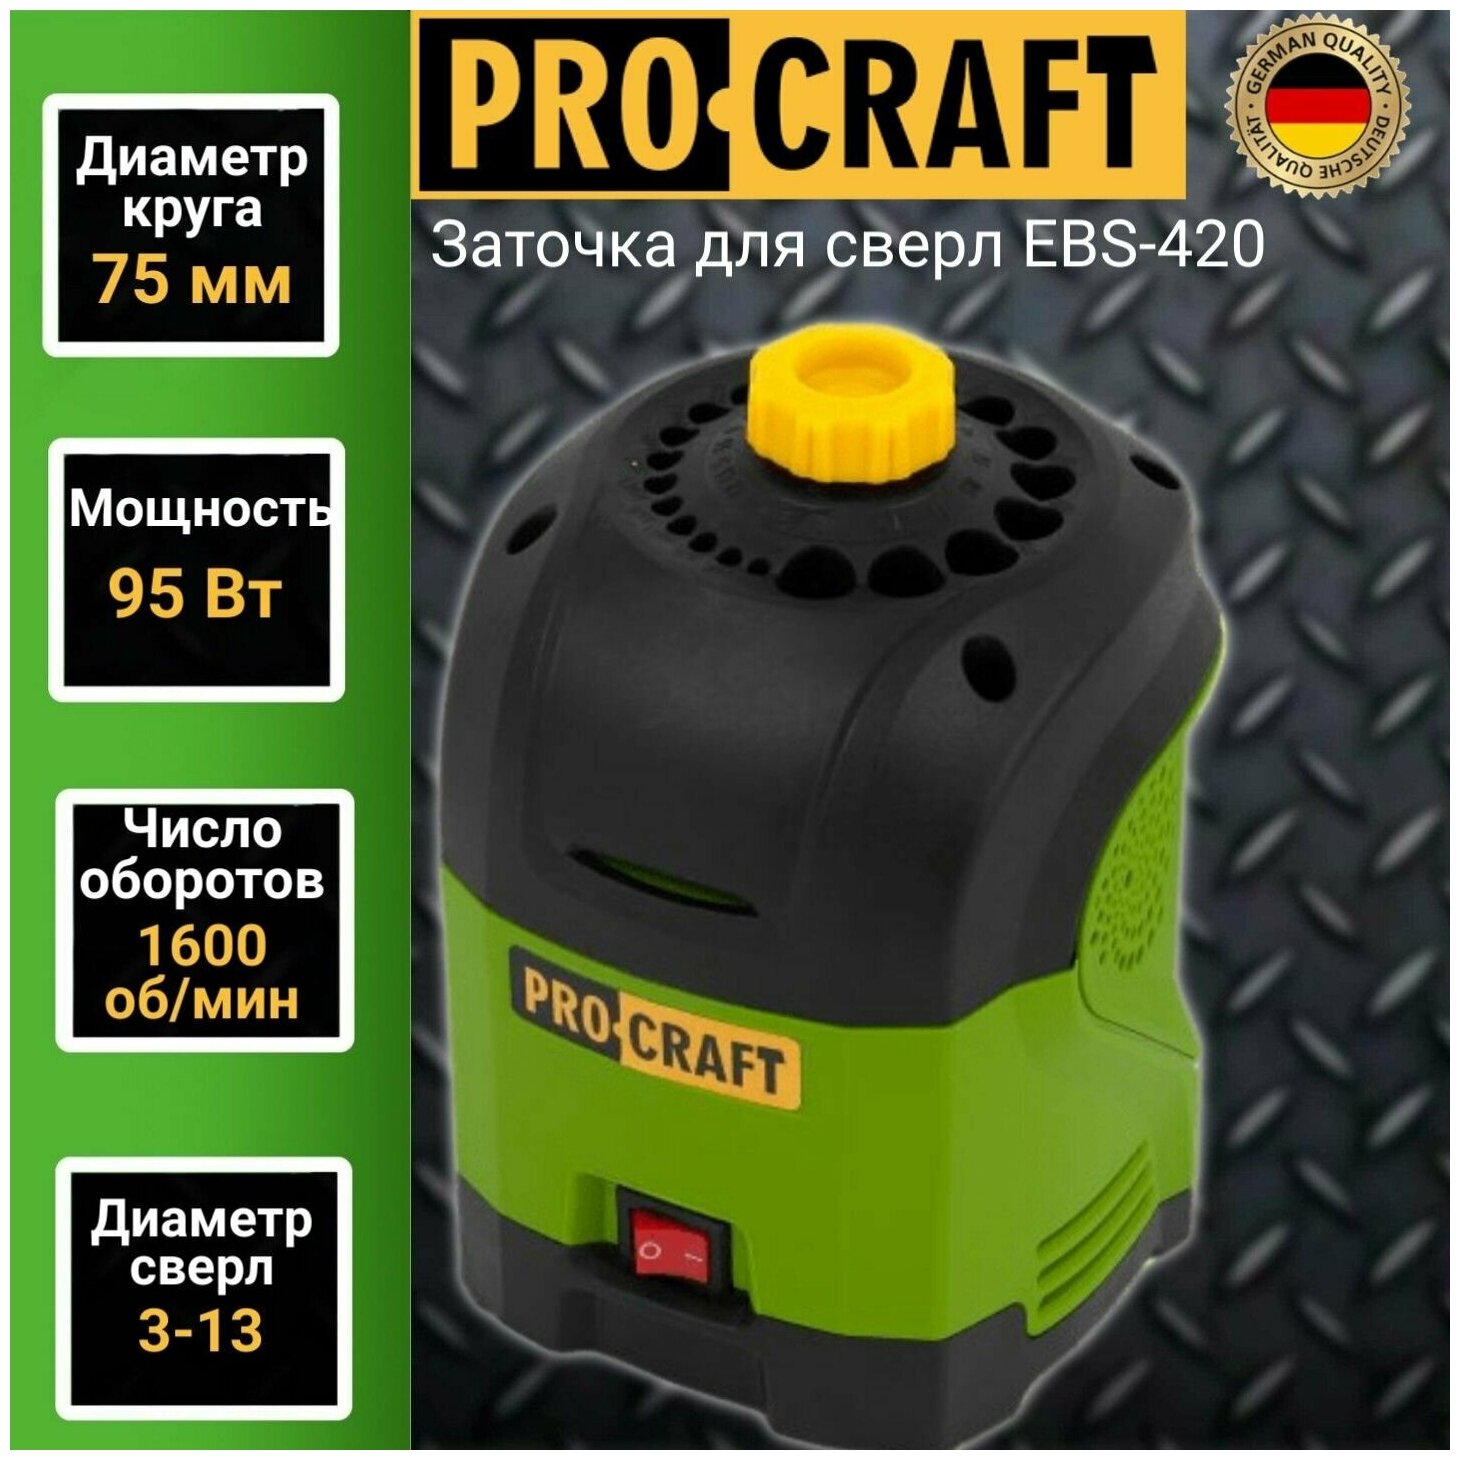 Станок для заточки сверел ProСraft EBS-420, 95Вт, 1600об/мин